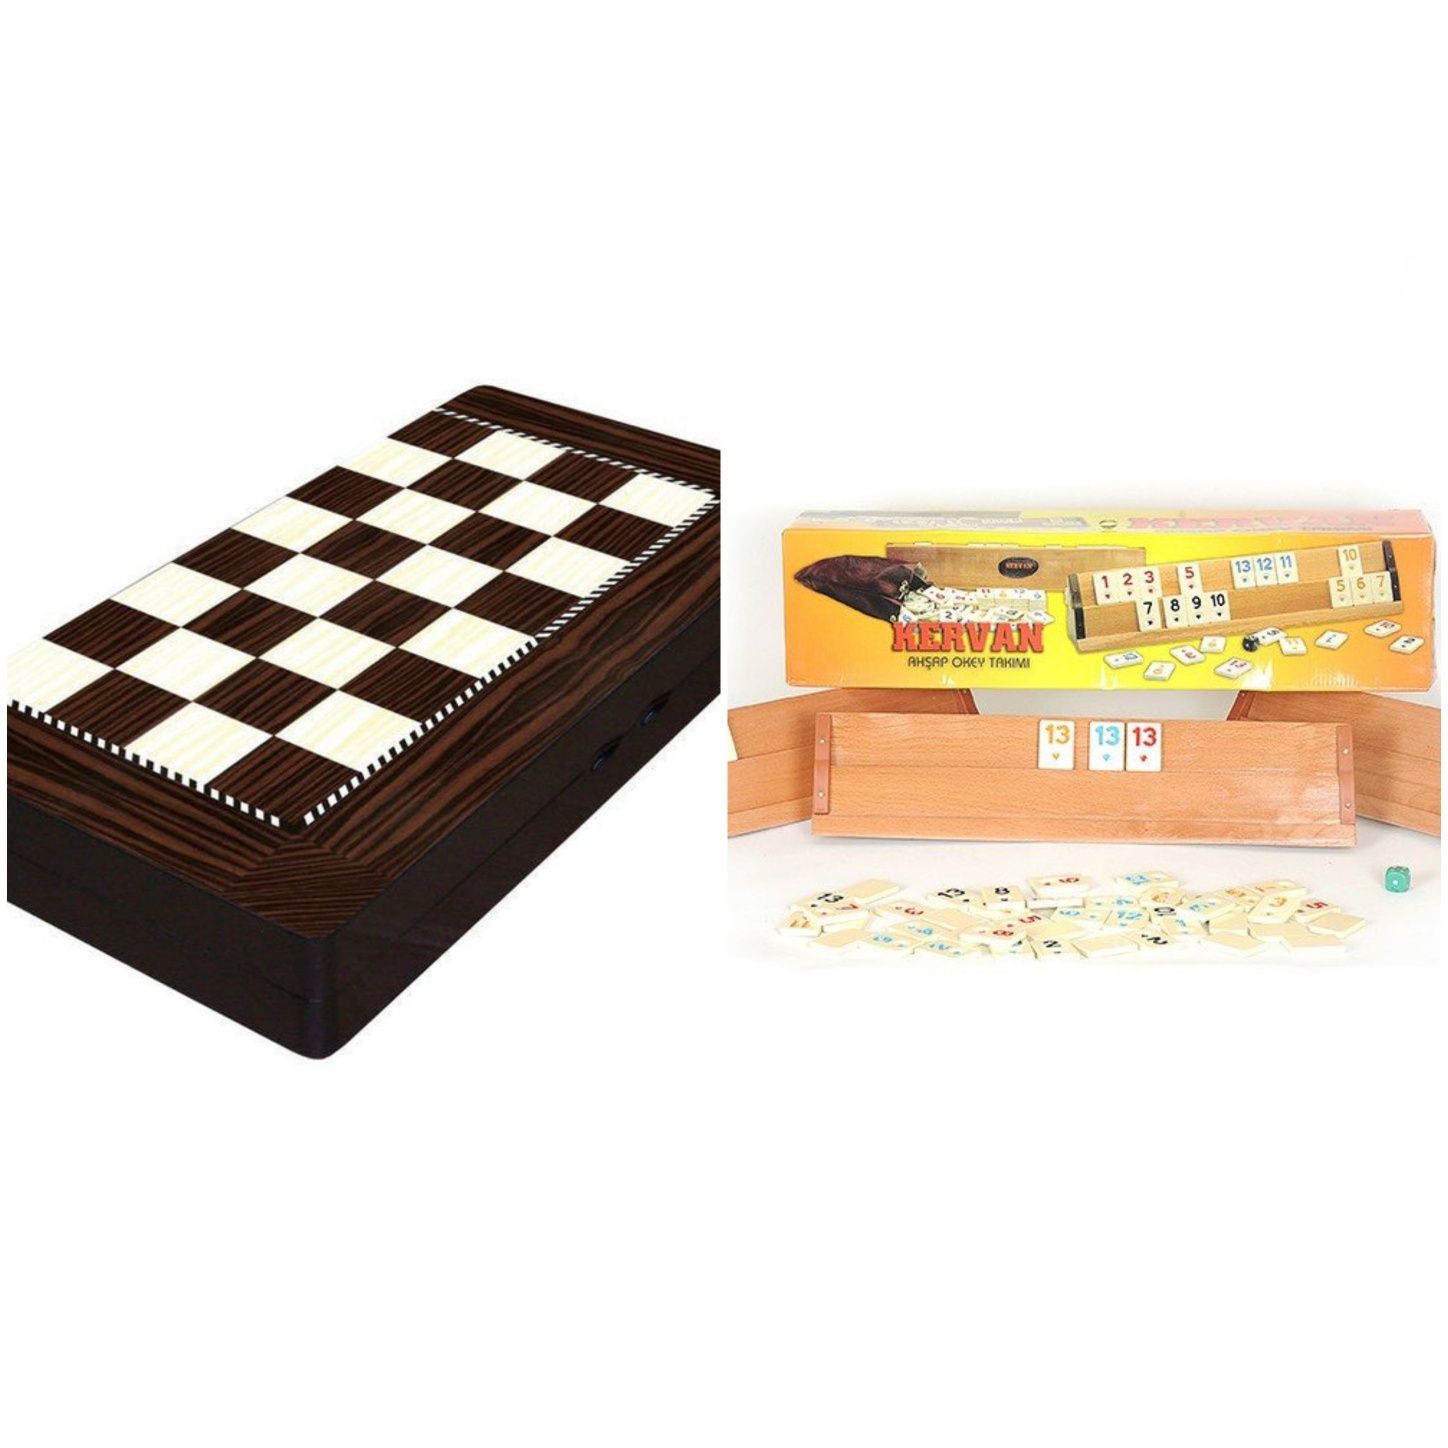 Joc table cutie mare joc remi lemn masiv table piese mari table+remi